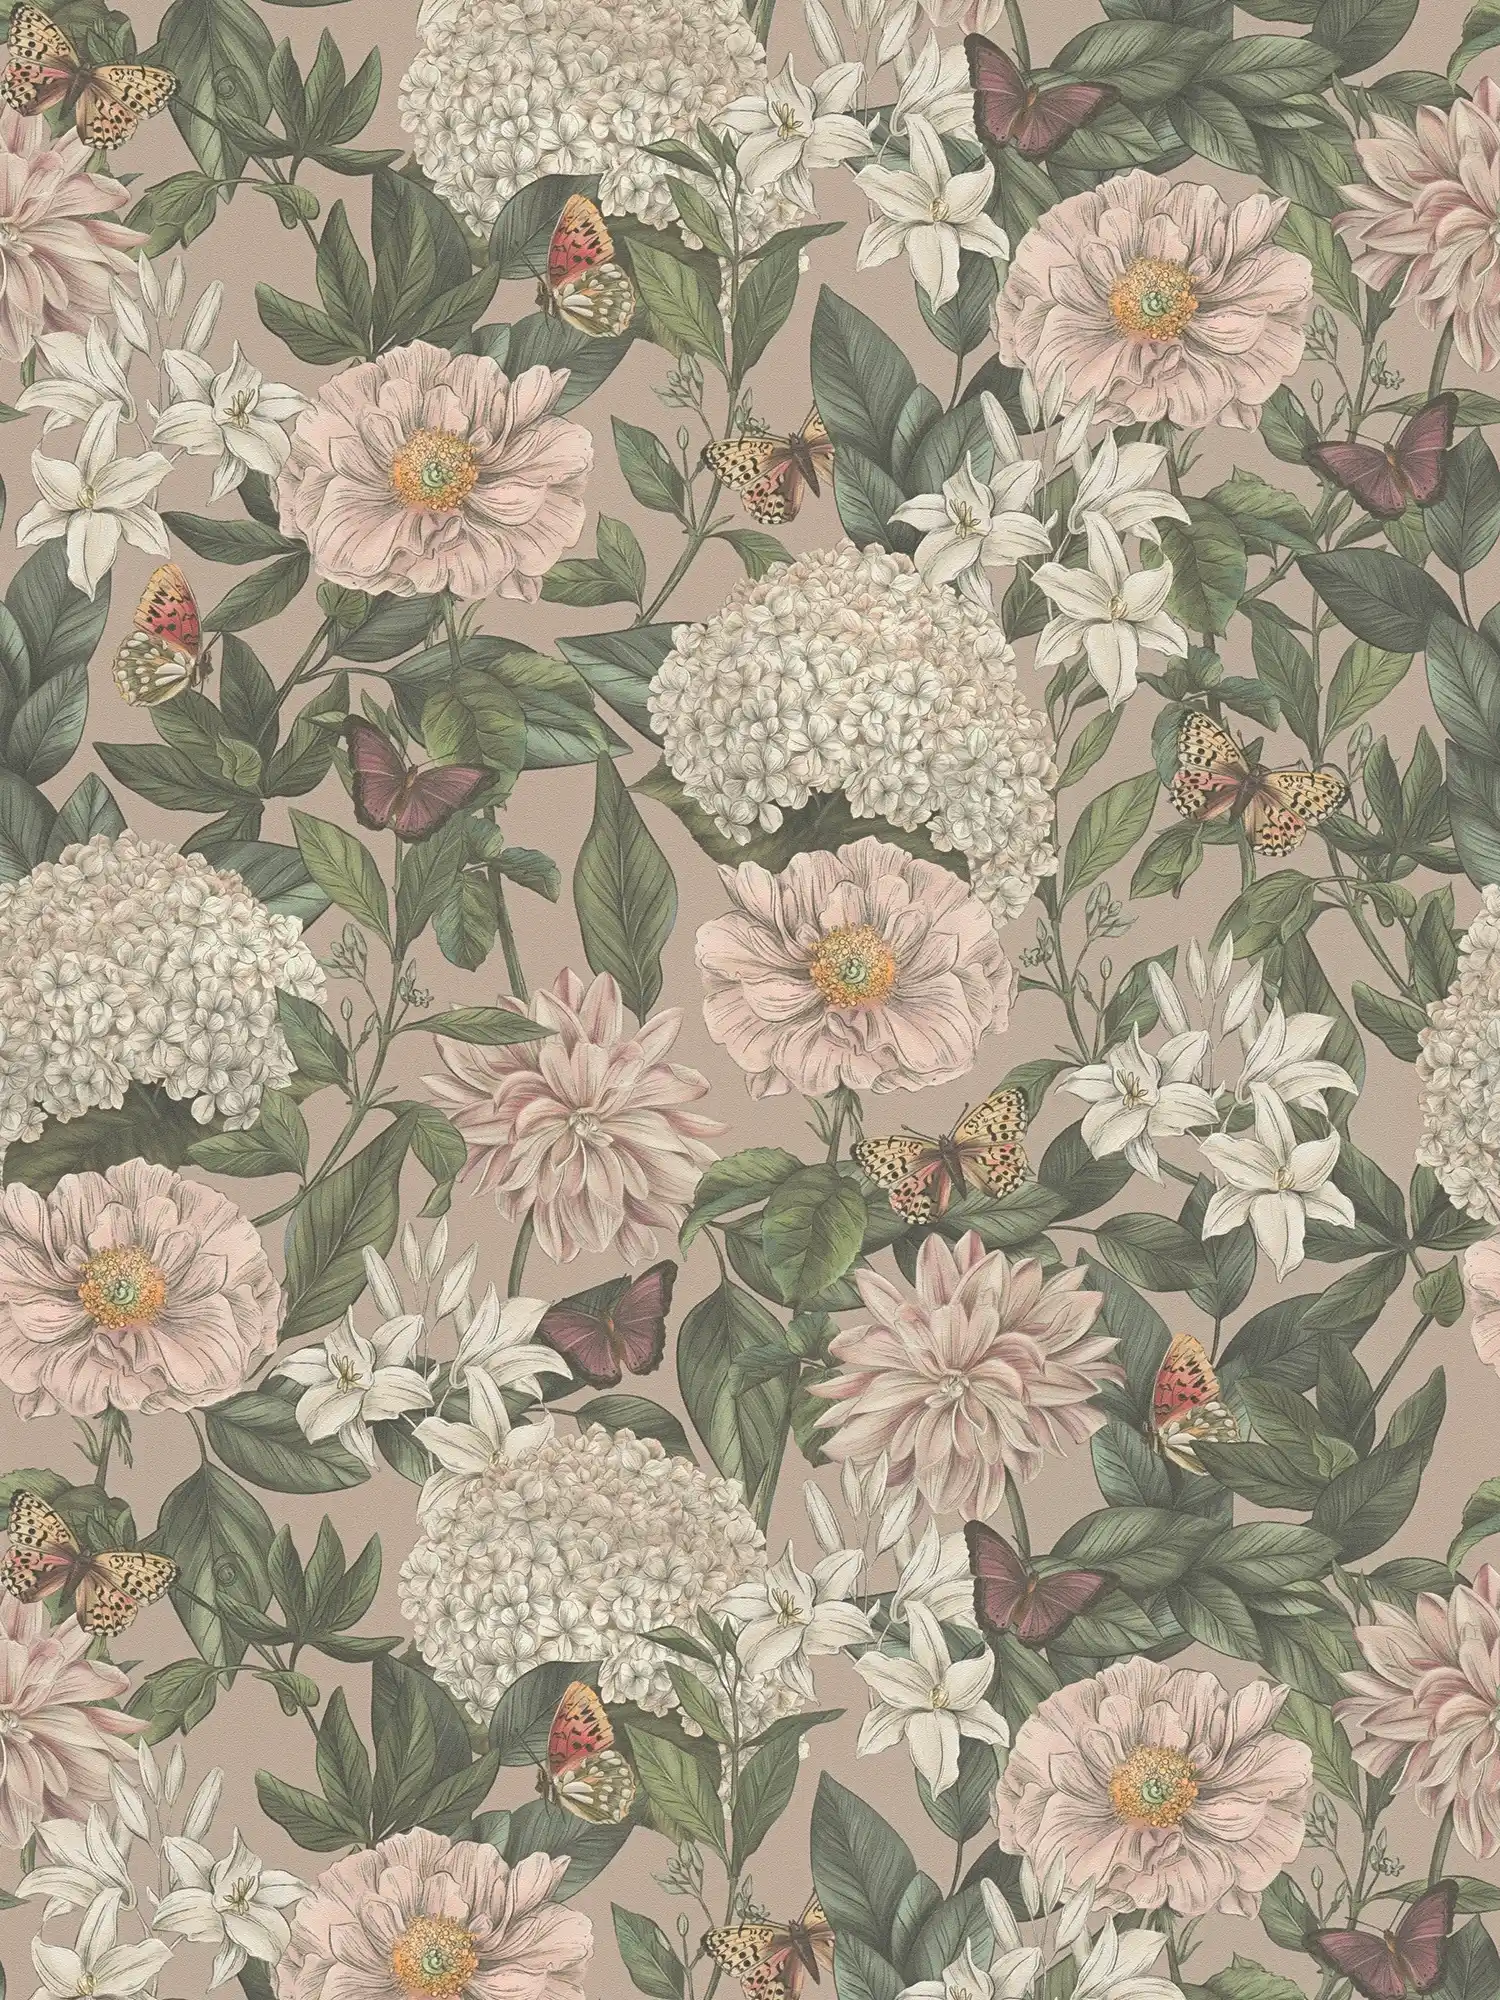 Floral wallpaper modern with animals & flowers textured matt - pink, green, white
